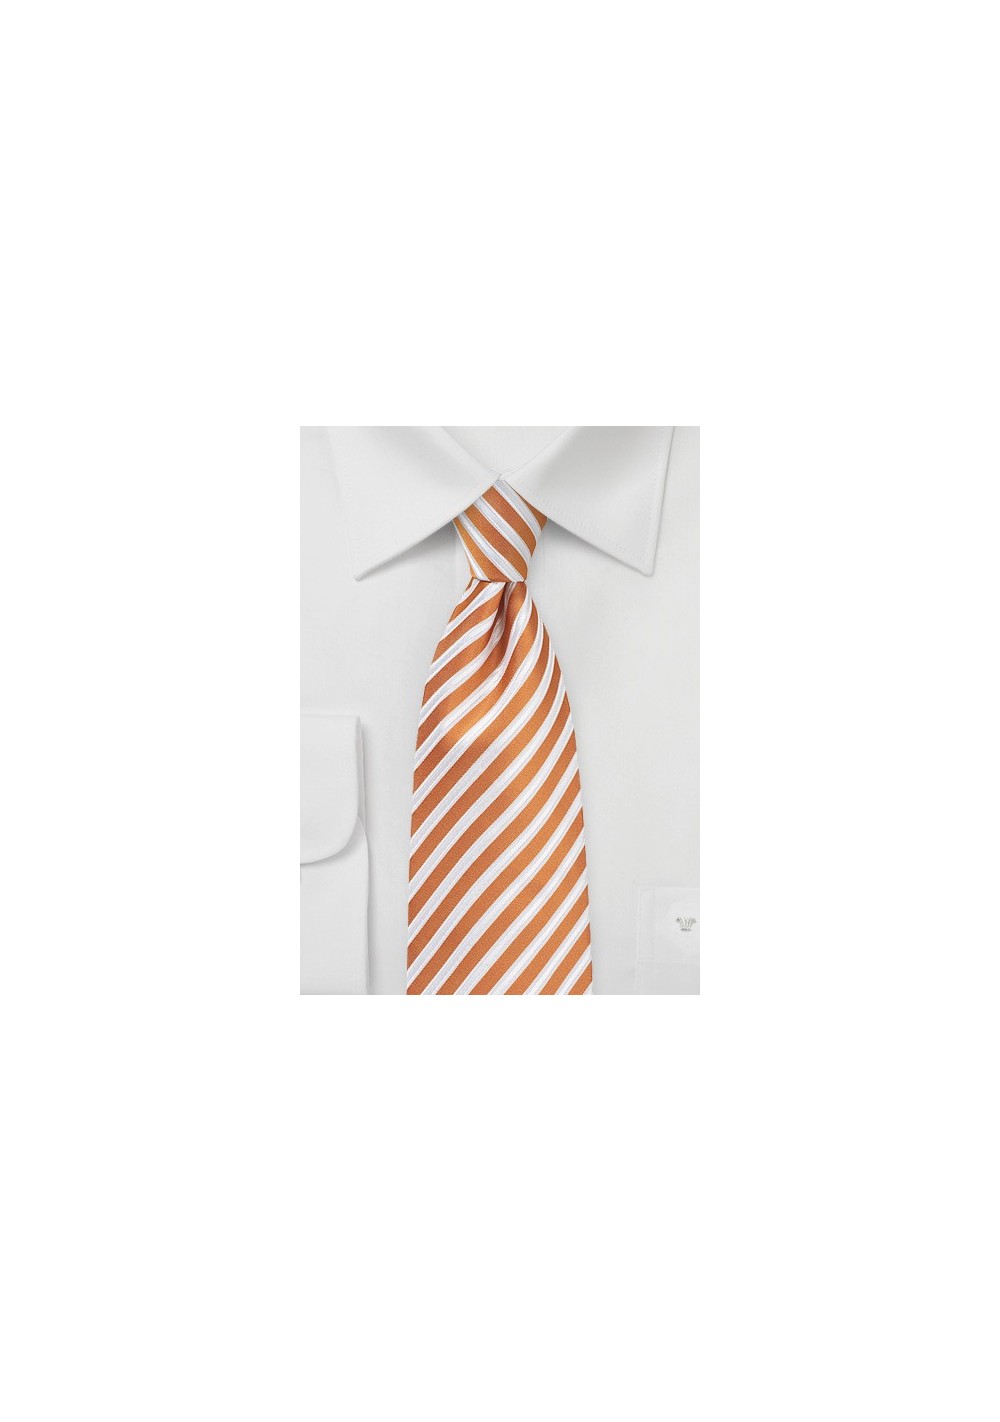 Elegant Summer Tie in Orange and White